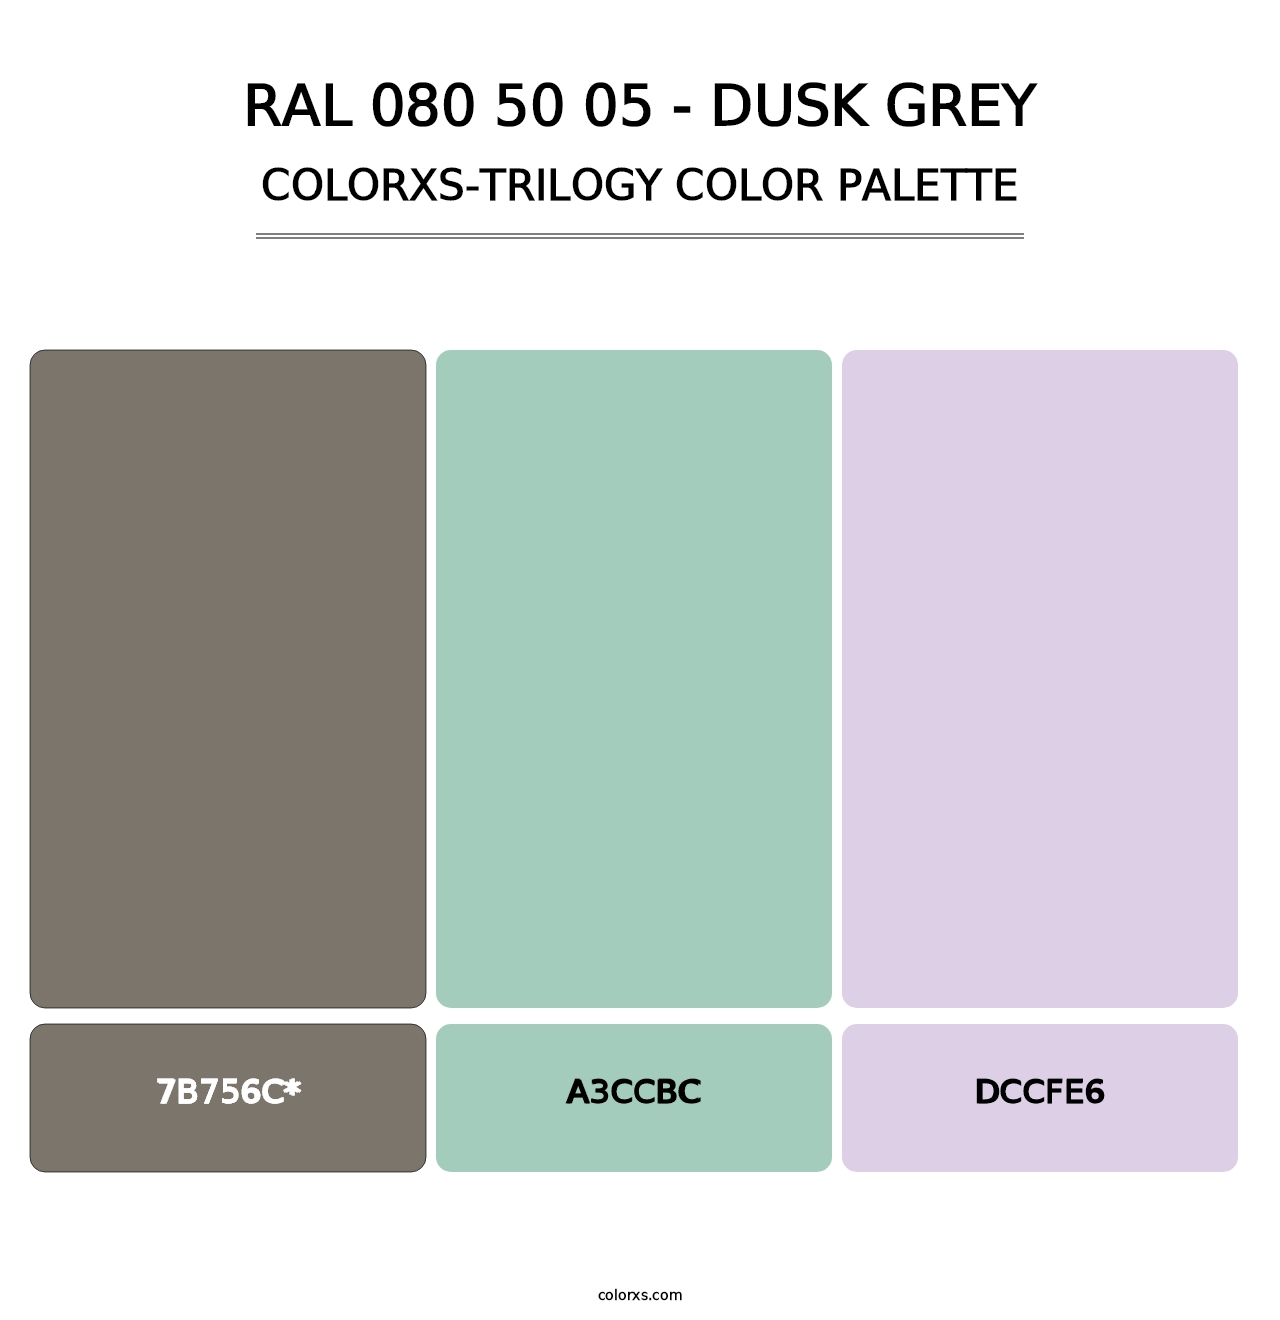 RAL 080 50 05 - Dusk Grey - Colorxs Trilogy Palette